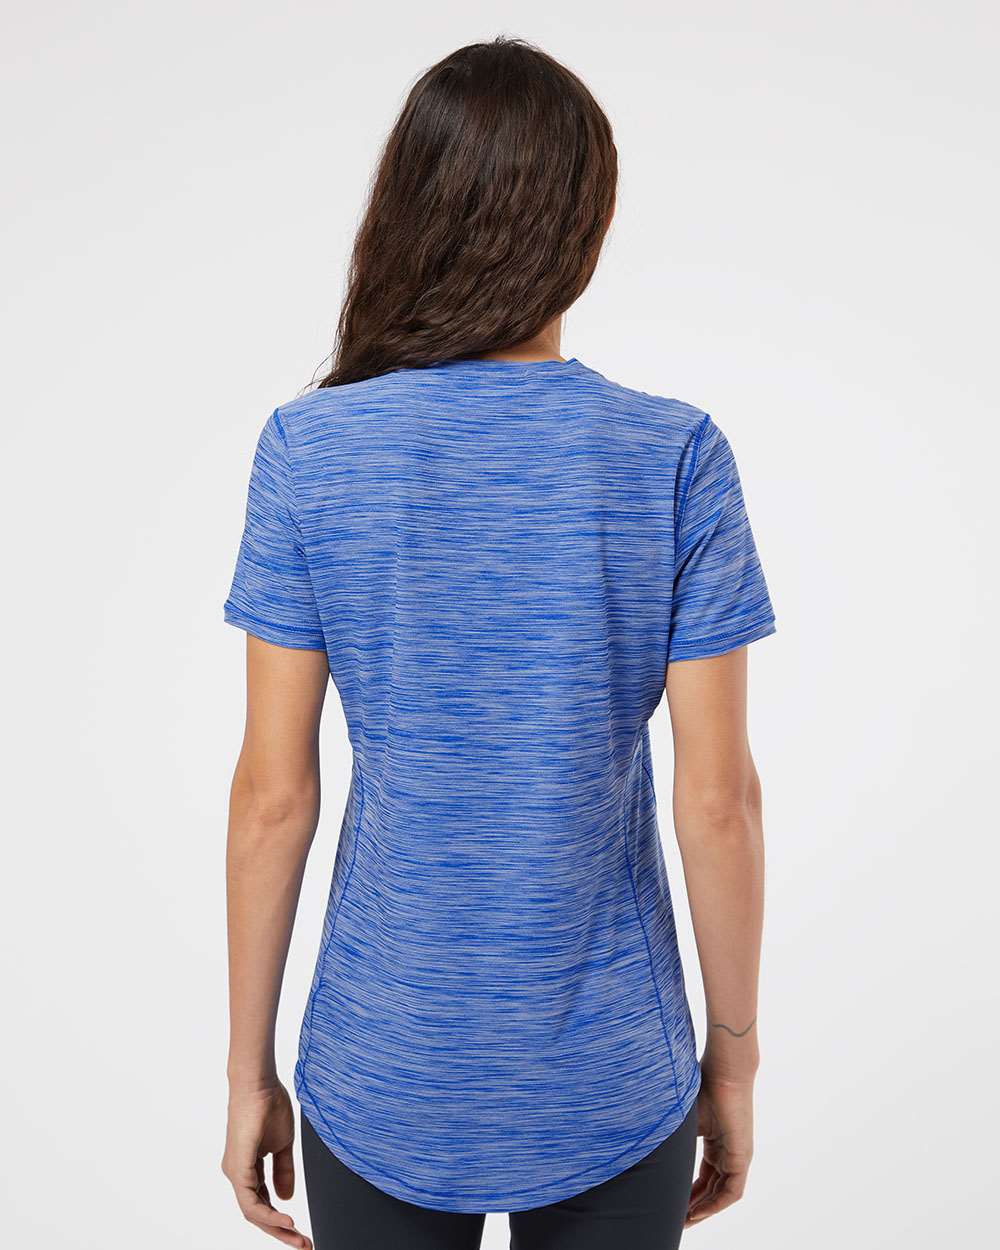 Adidas Women's Mèlange Tech V-Neck T-Shirt #A373 Collegiate Royal Melange Back